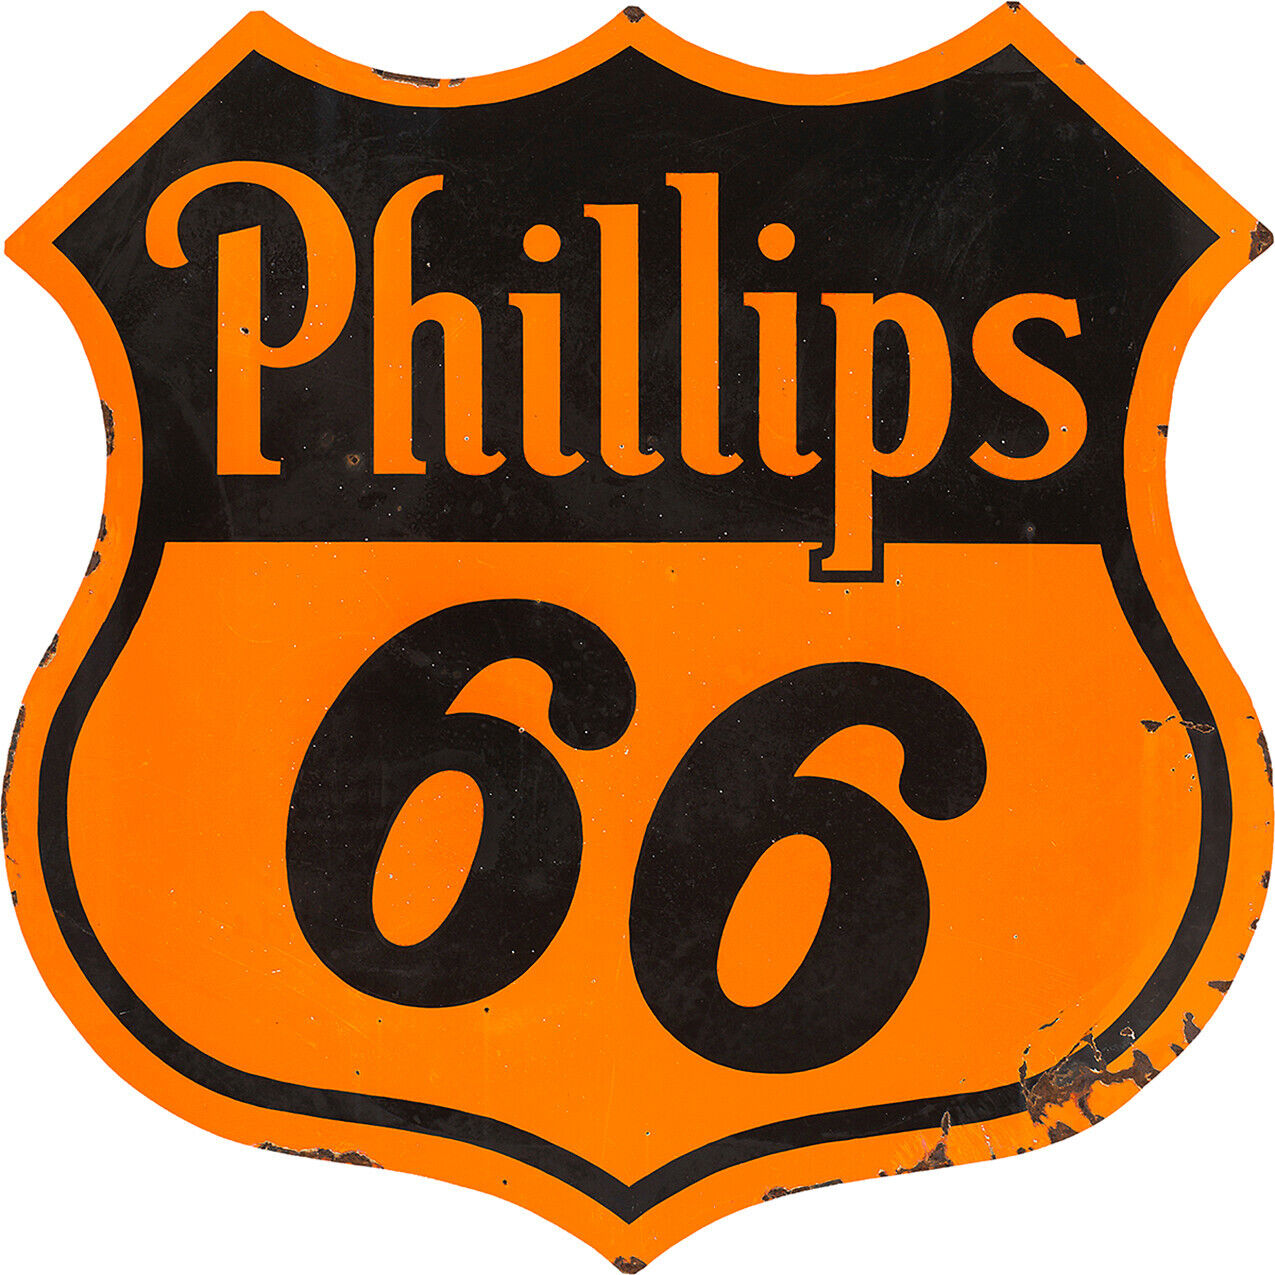 PHILLIPS 66 ADVERTISING METAL SIGN